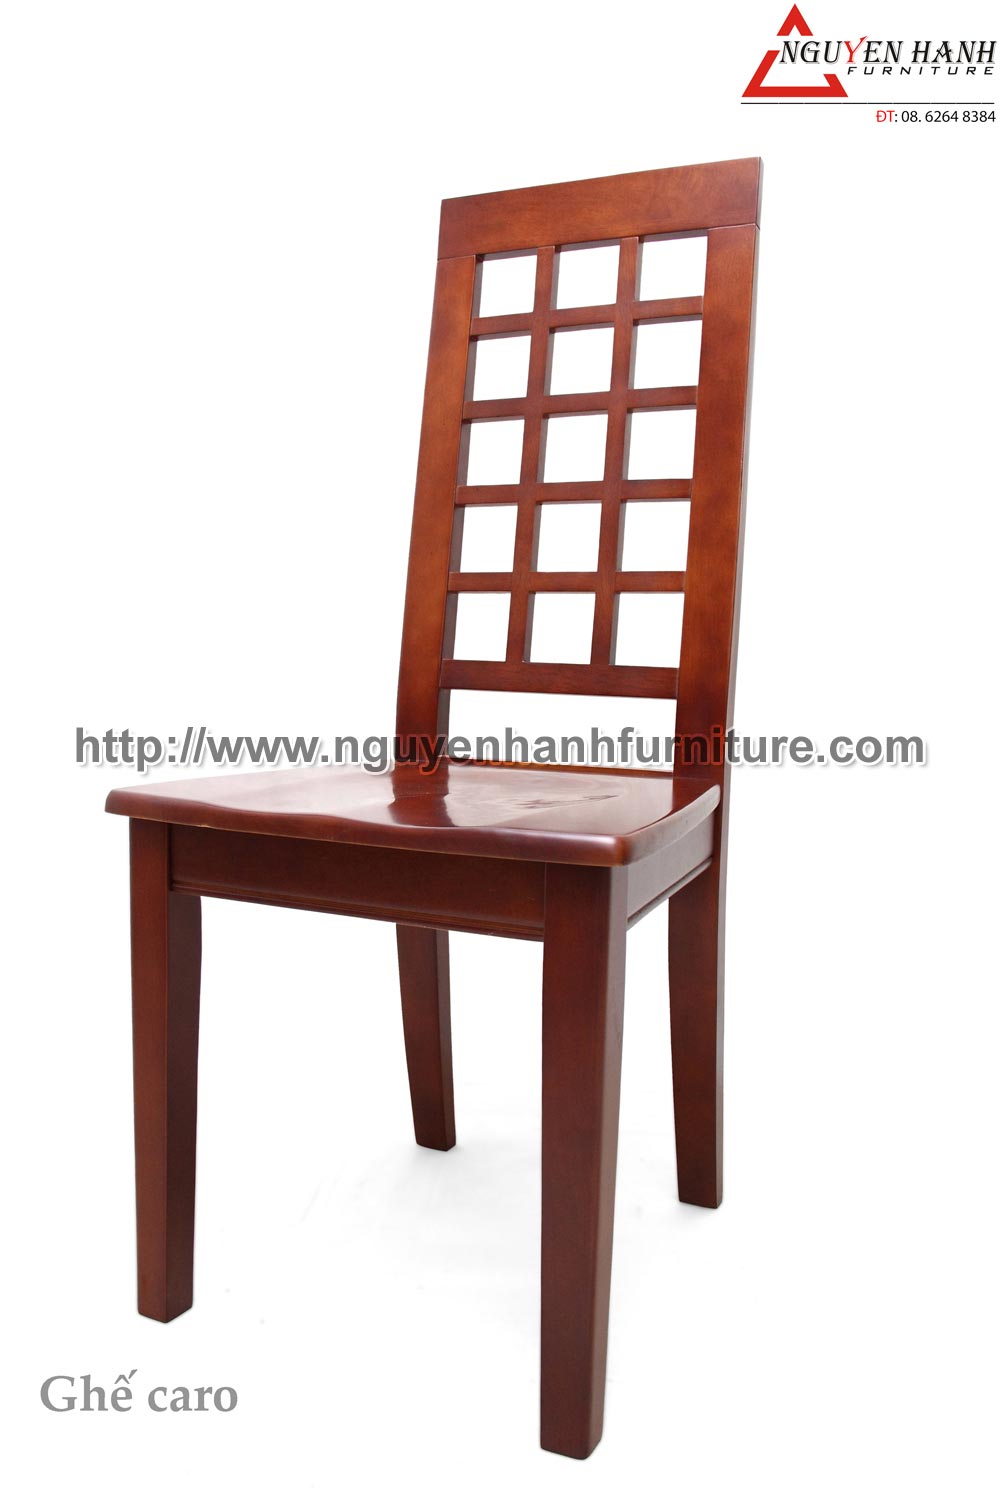 Name product: caro chair